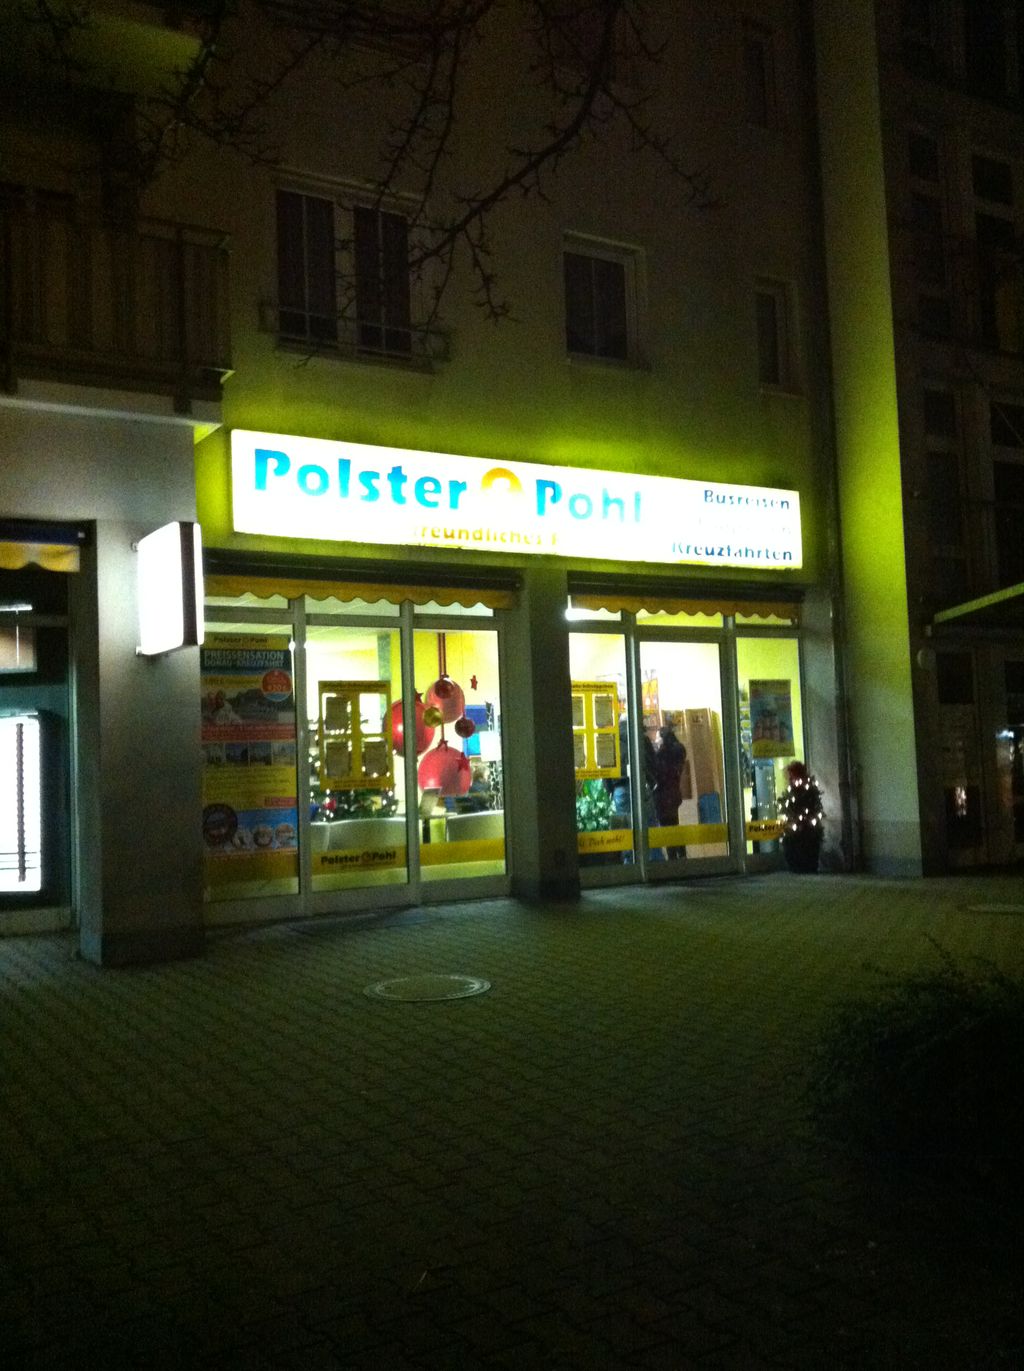 Nutzerfoto 1 Polster & Pohl Reisen GmbH & Co. KG